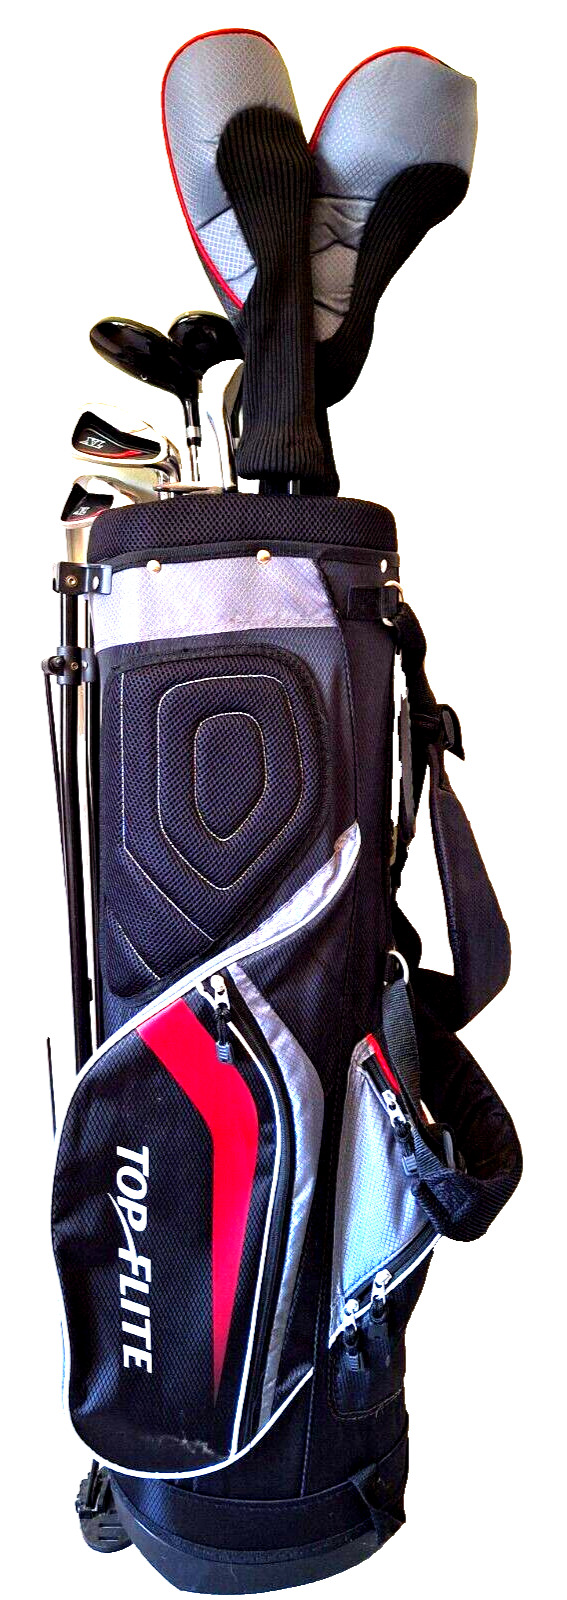 Men's RH Golf Set w/ Top Flite Clubs - Stand Bag - 10 Clubs - 2 Headcovers